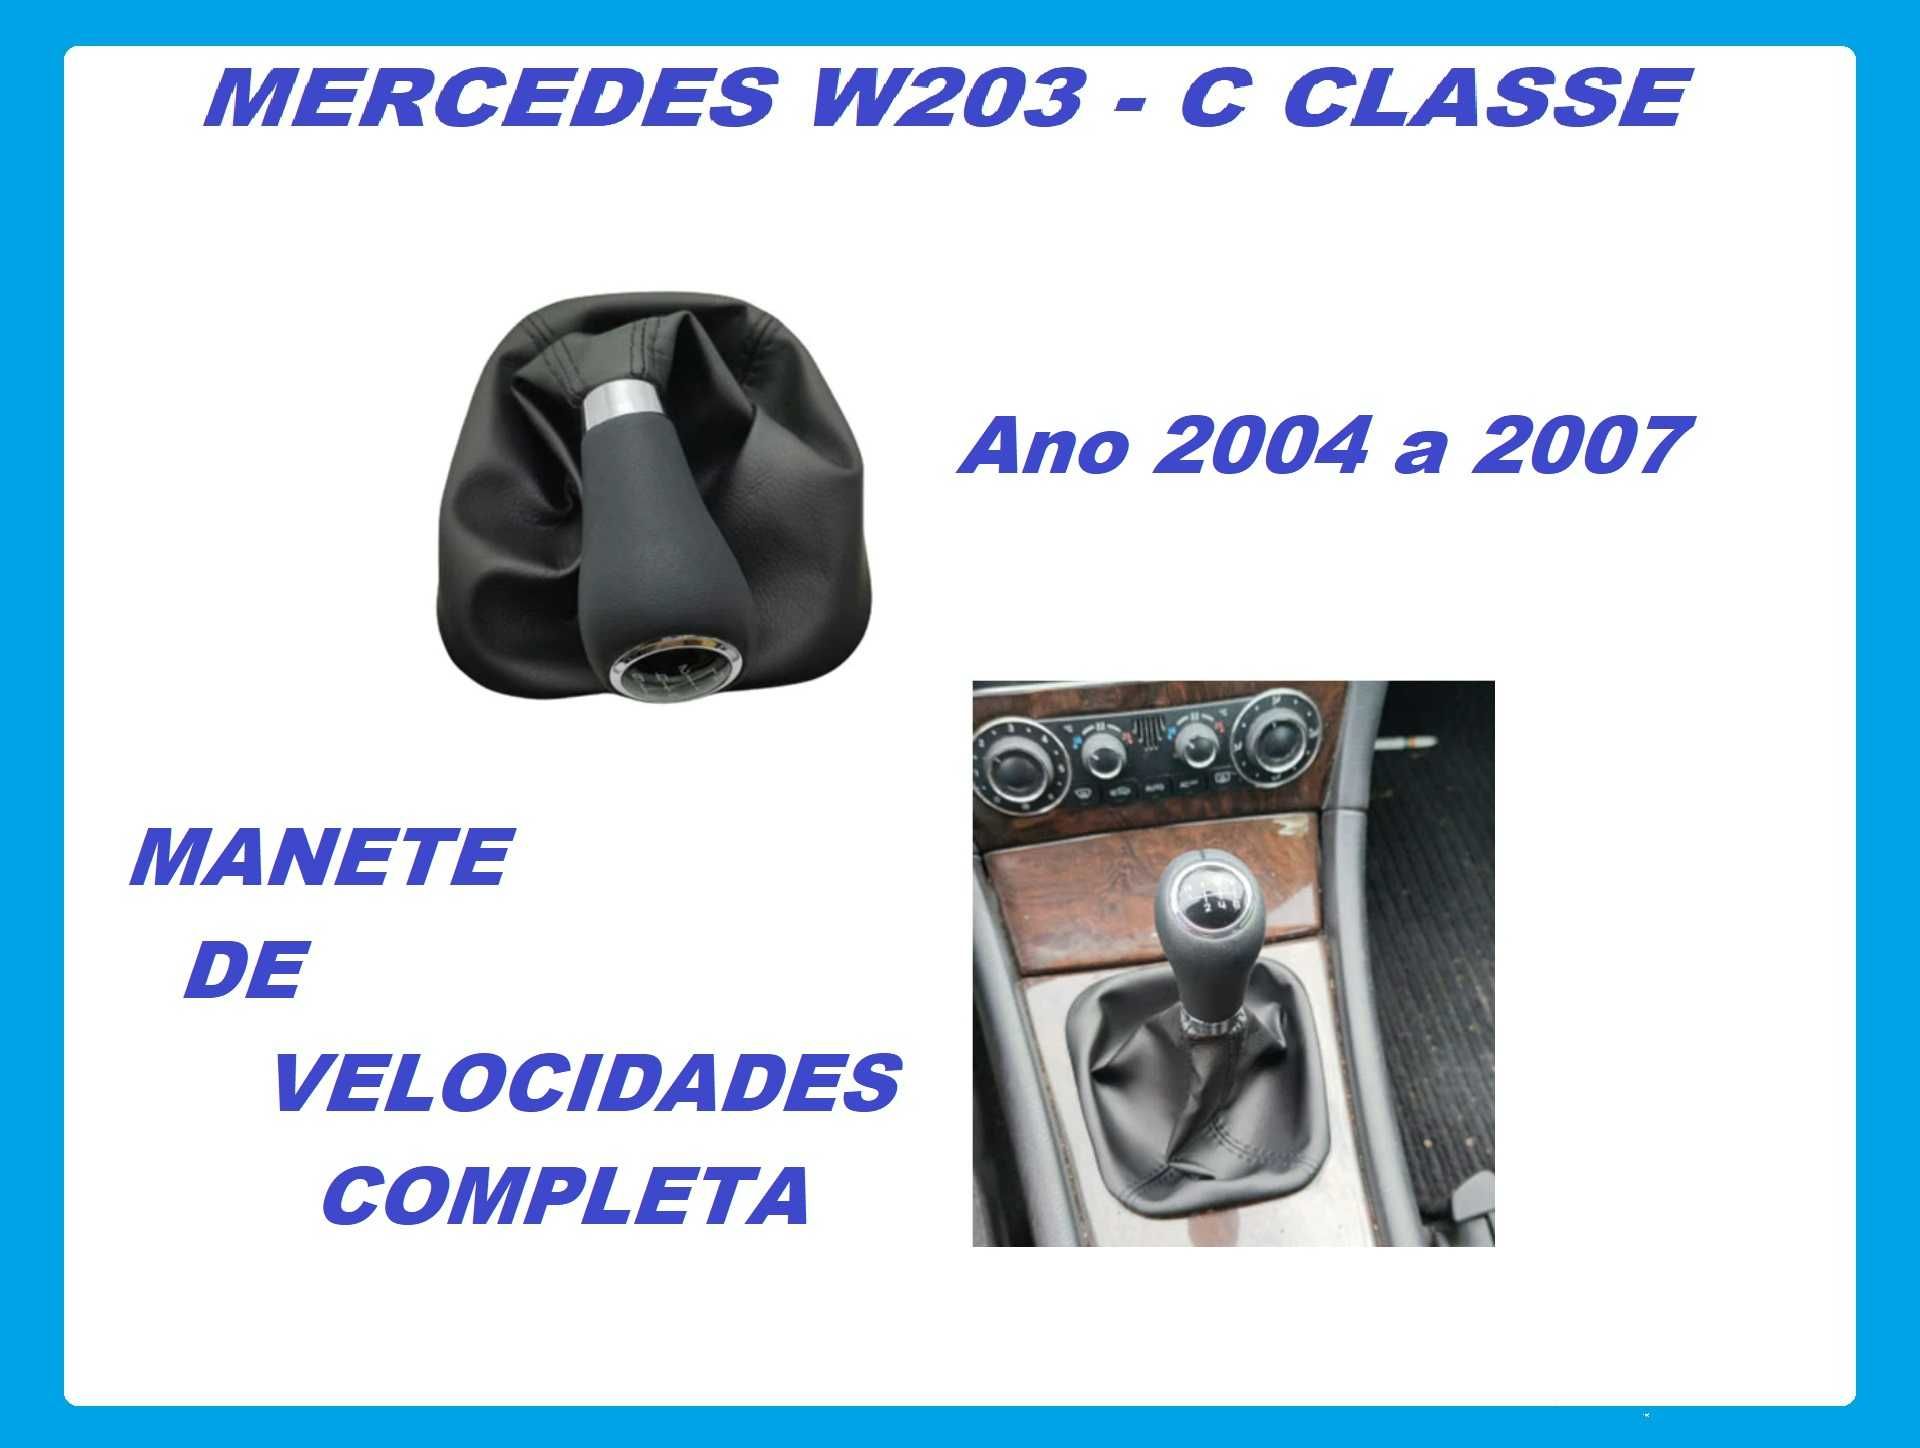 Manete de Velocidades Completa Mercedes w 203